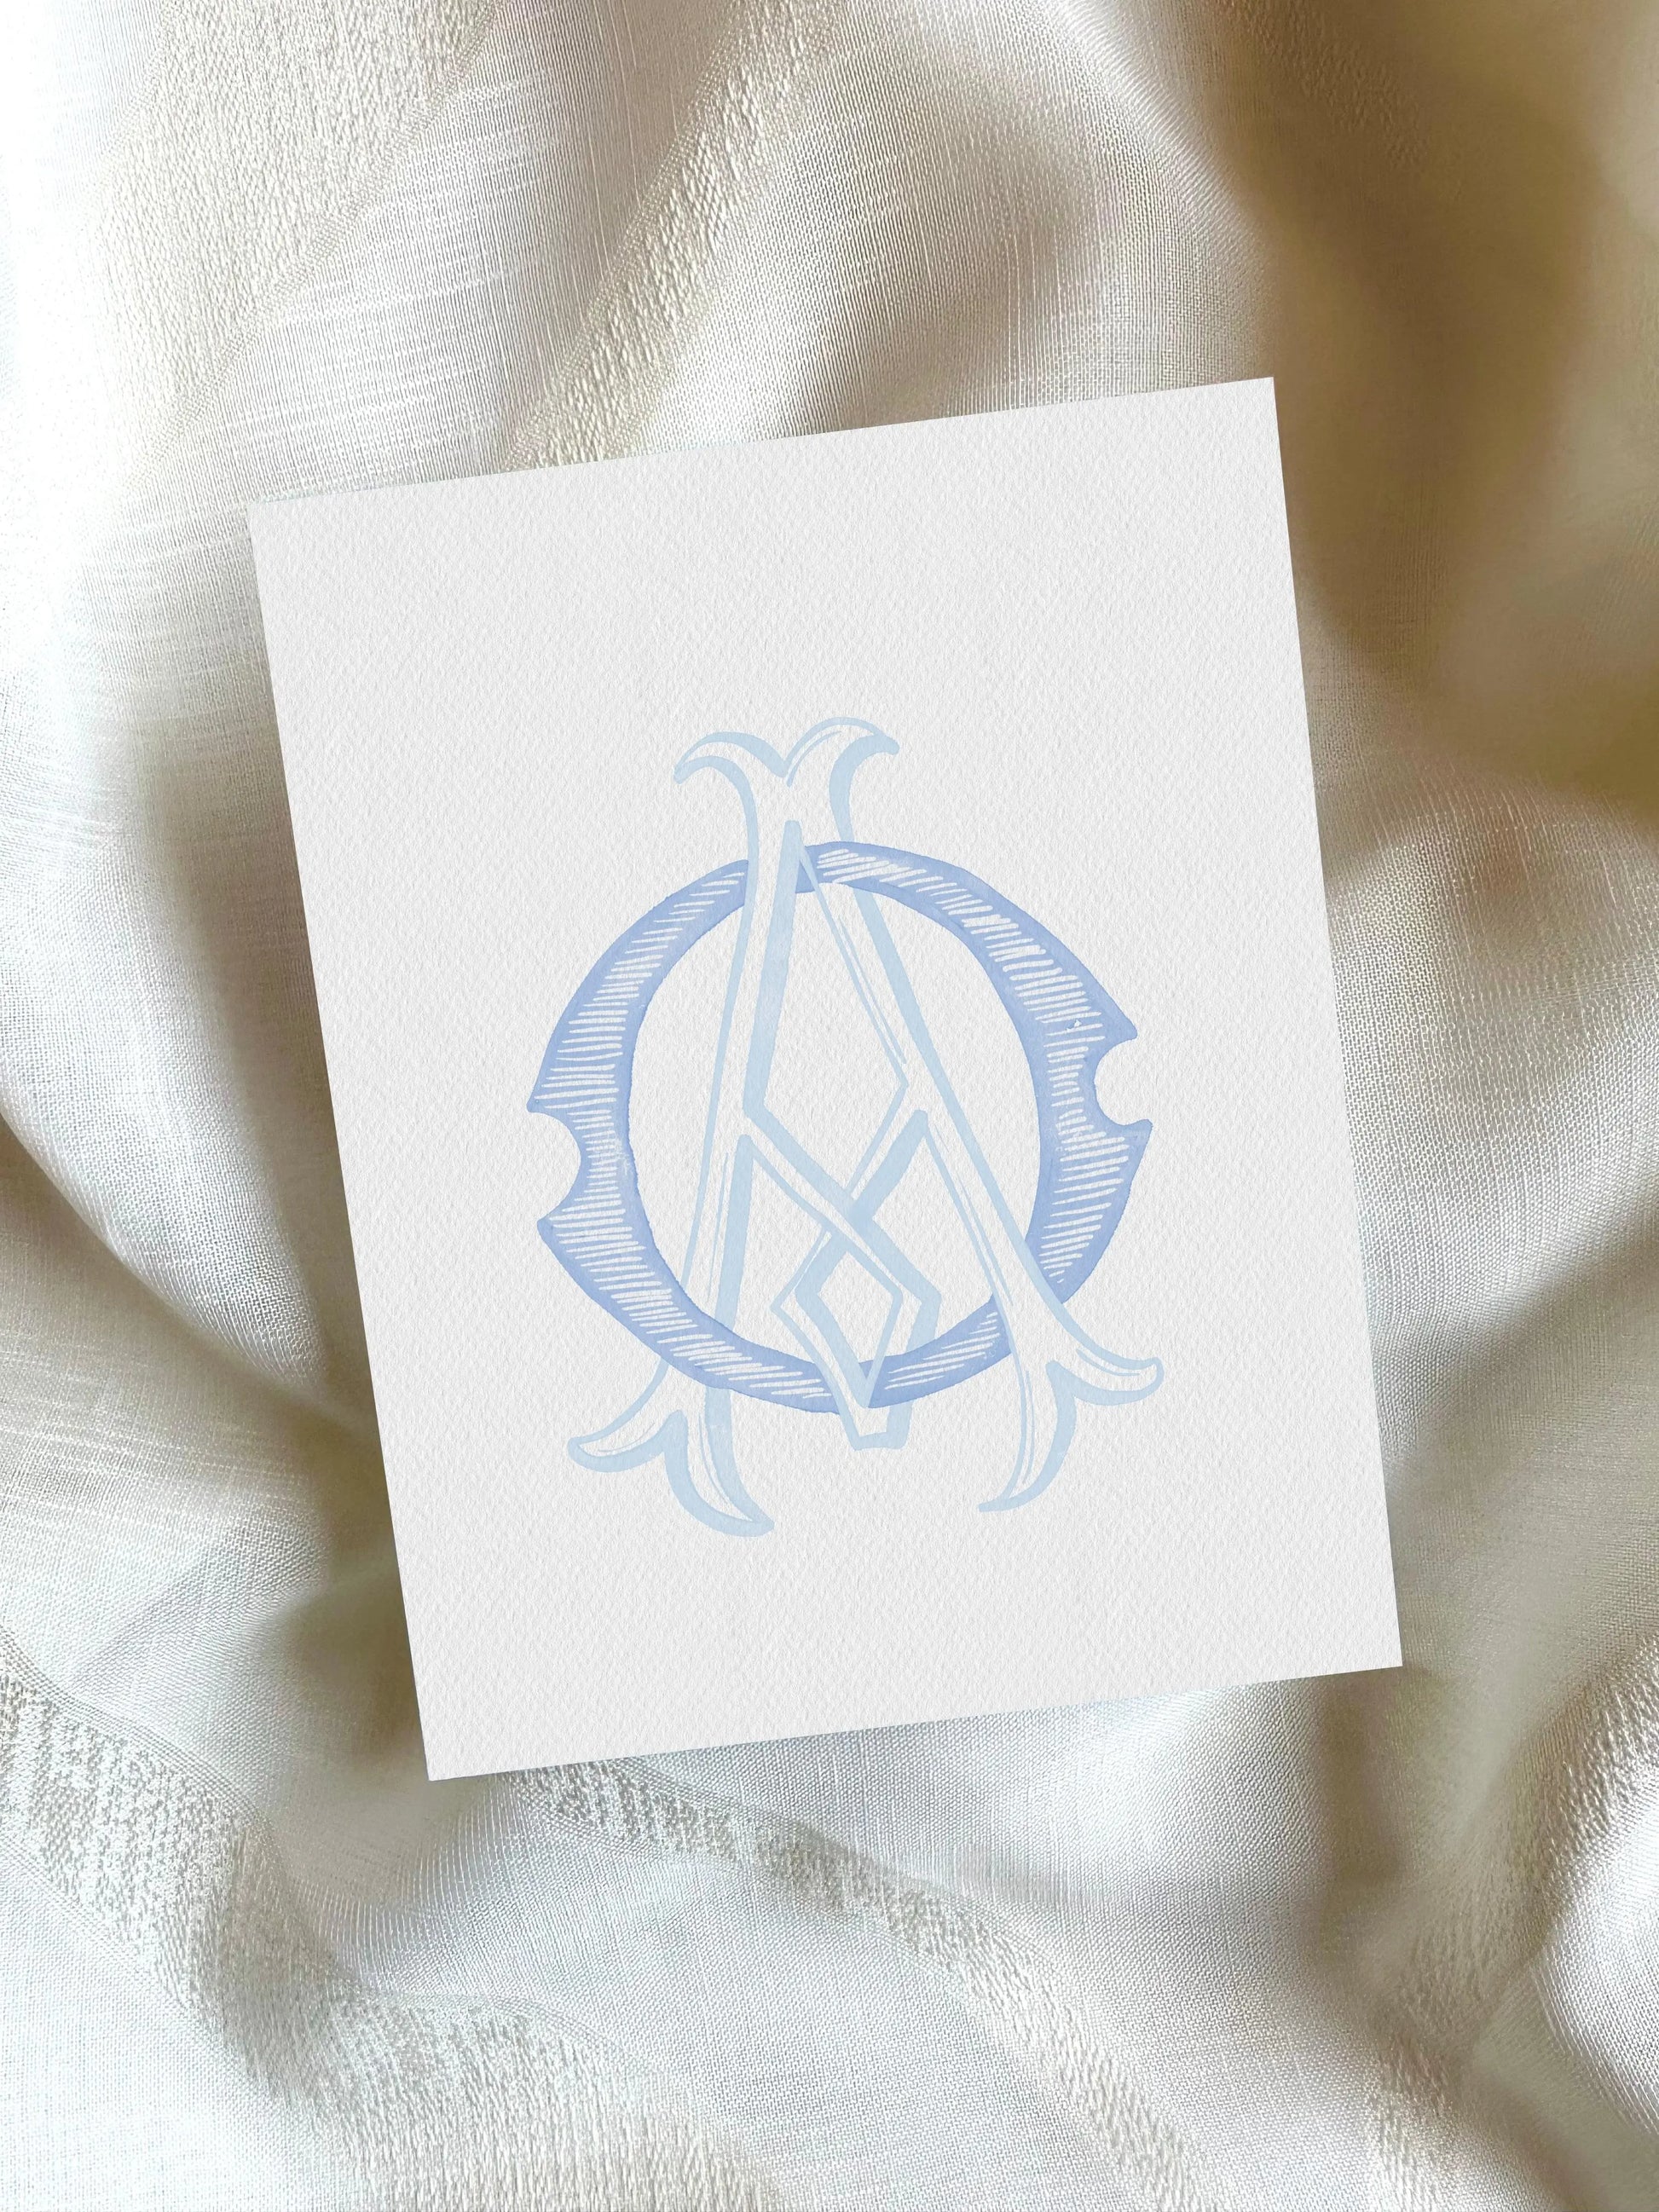 2 Letter Monogram with Letters AO | Digital Download - Wedding Monogram SVG, Personal Logo, Wedding Logo for Wedding Invitations The Wedding Crest Lab